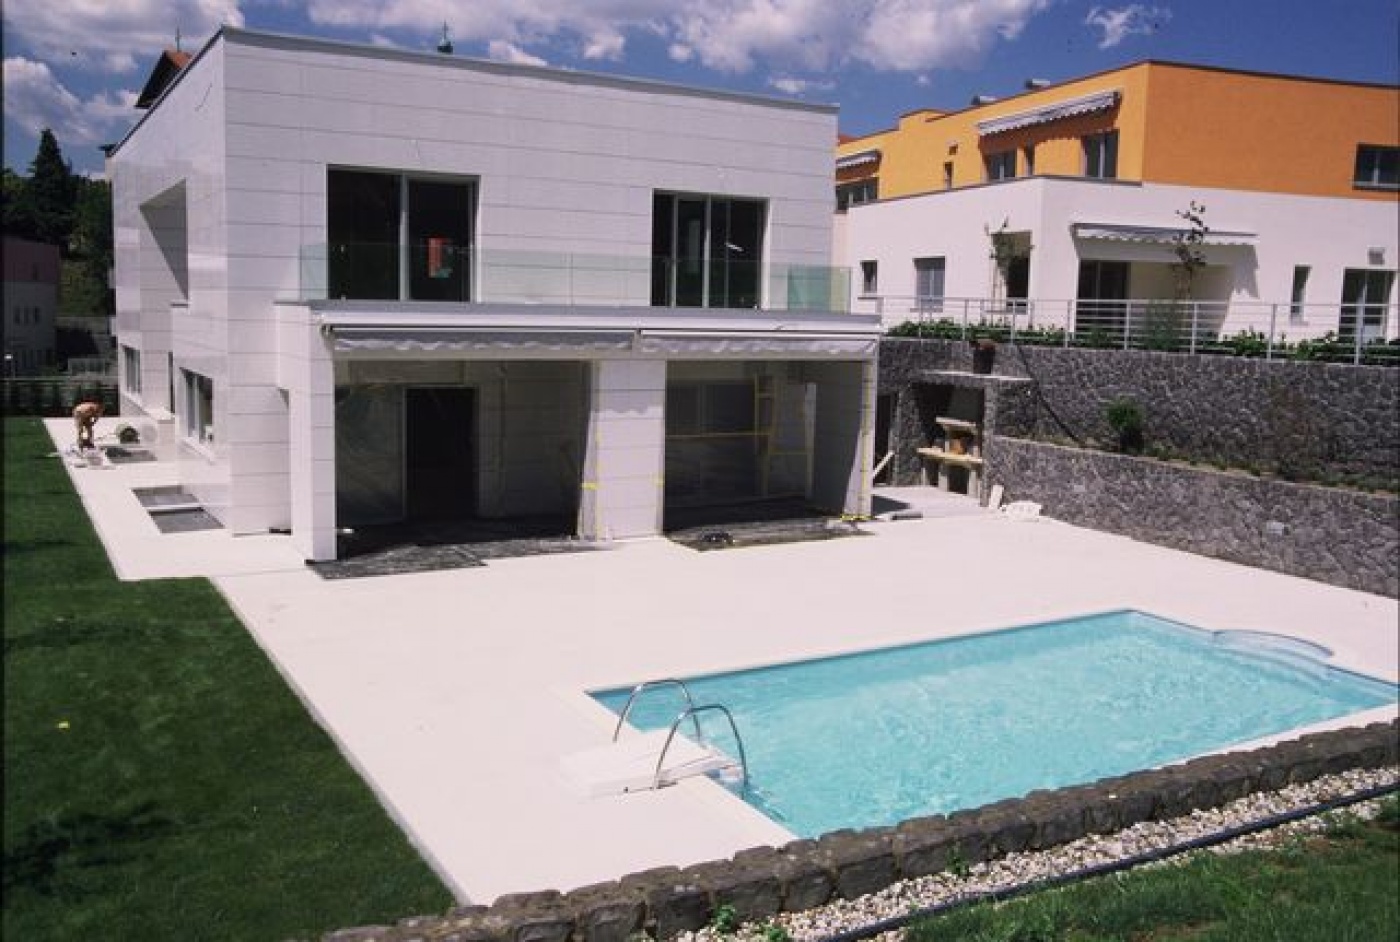 Limestone Fabrication de revetement de façade sur mesure en composite quartz Blanco Paloma 